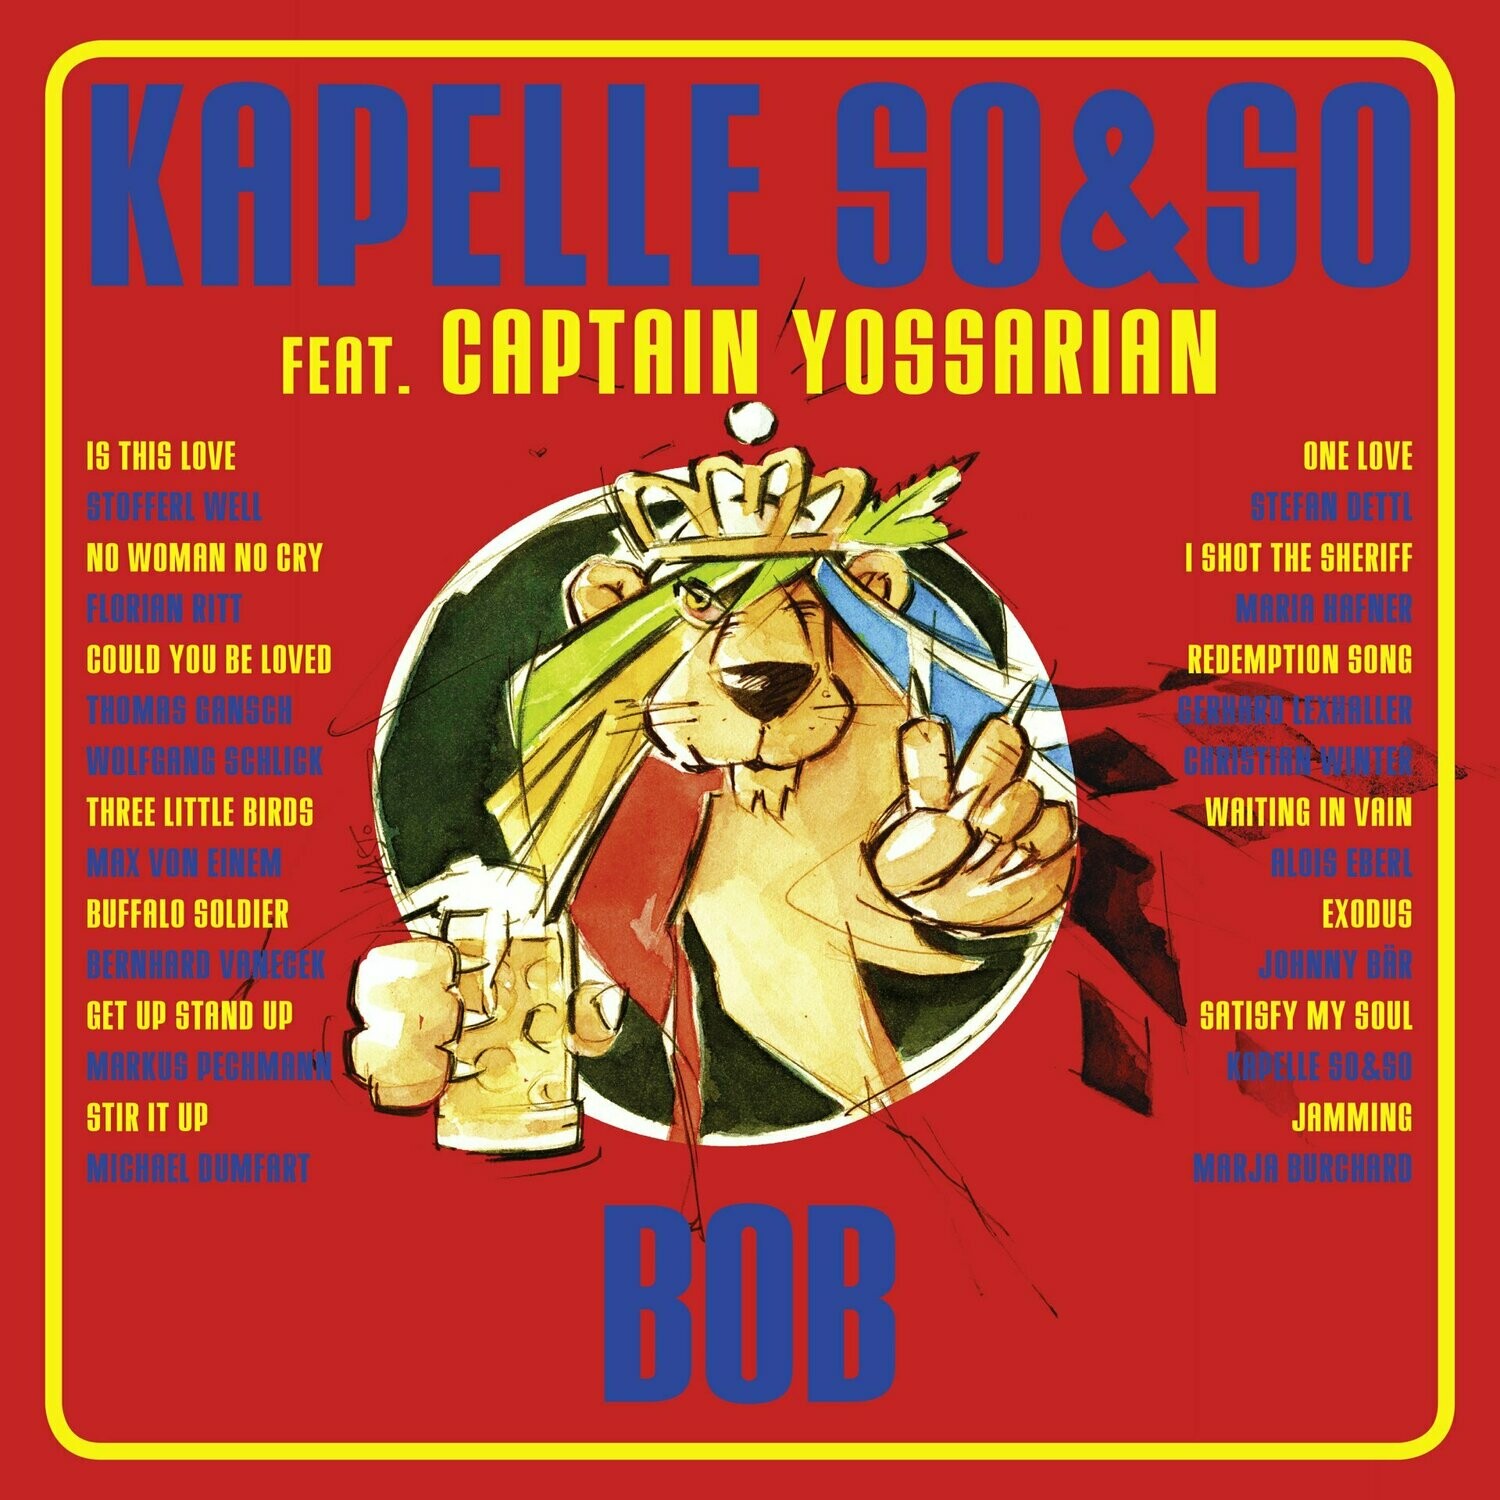 MP3-Album Kapelle So&So feat. Captain Yossarian / BOB - DOWNLOAD